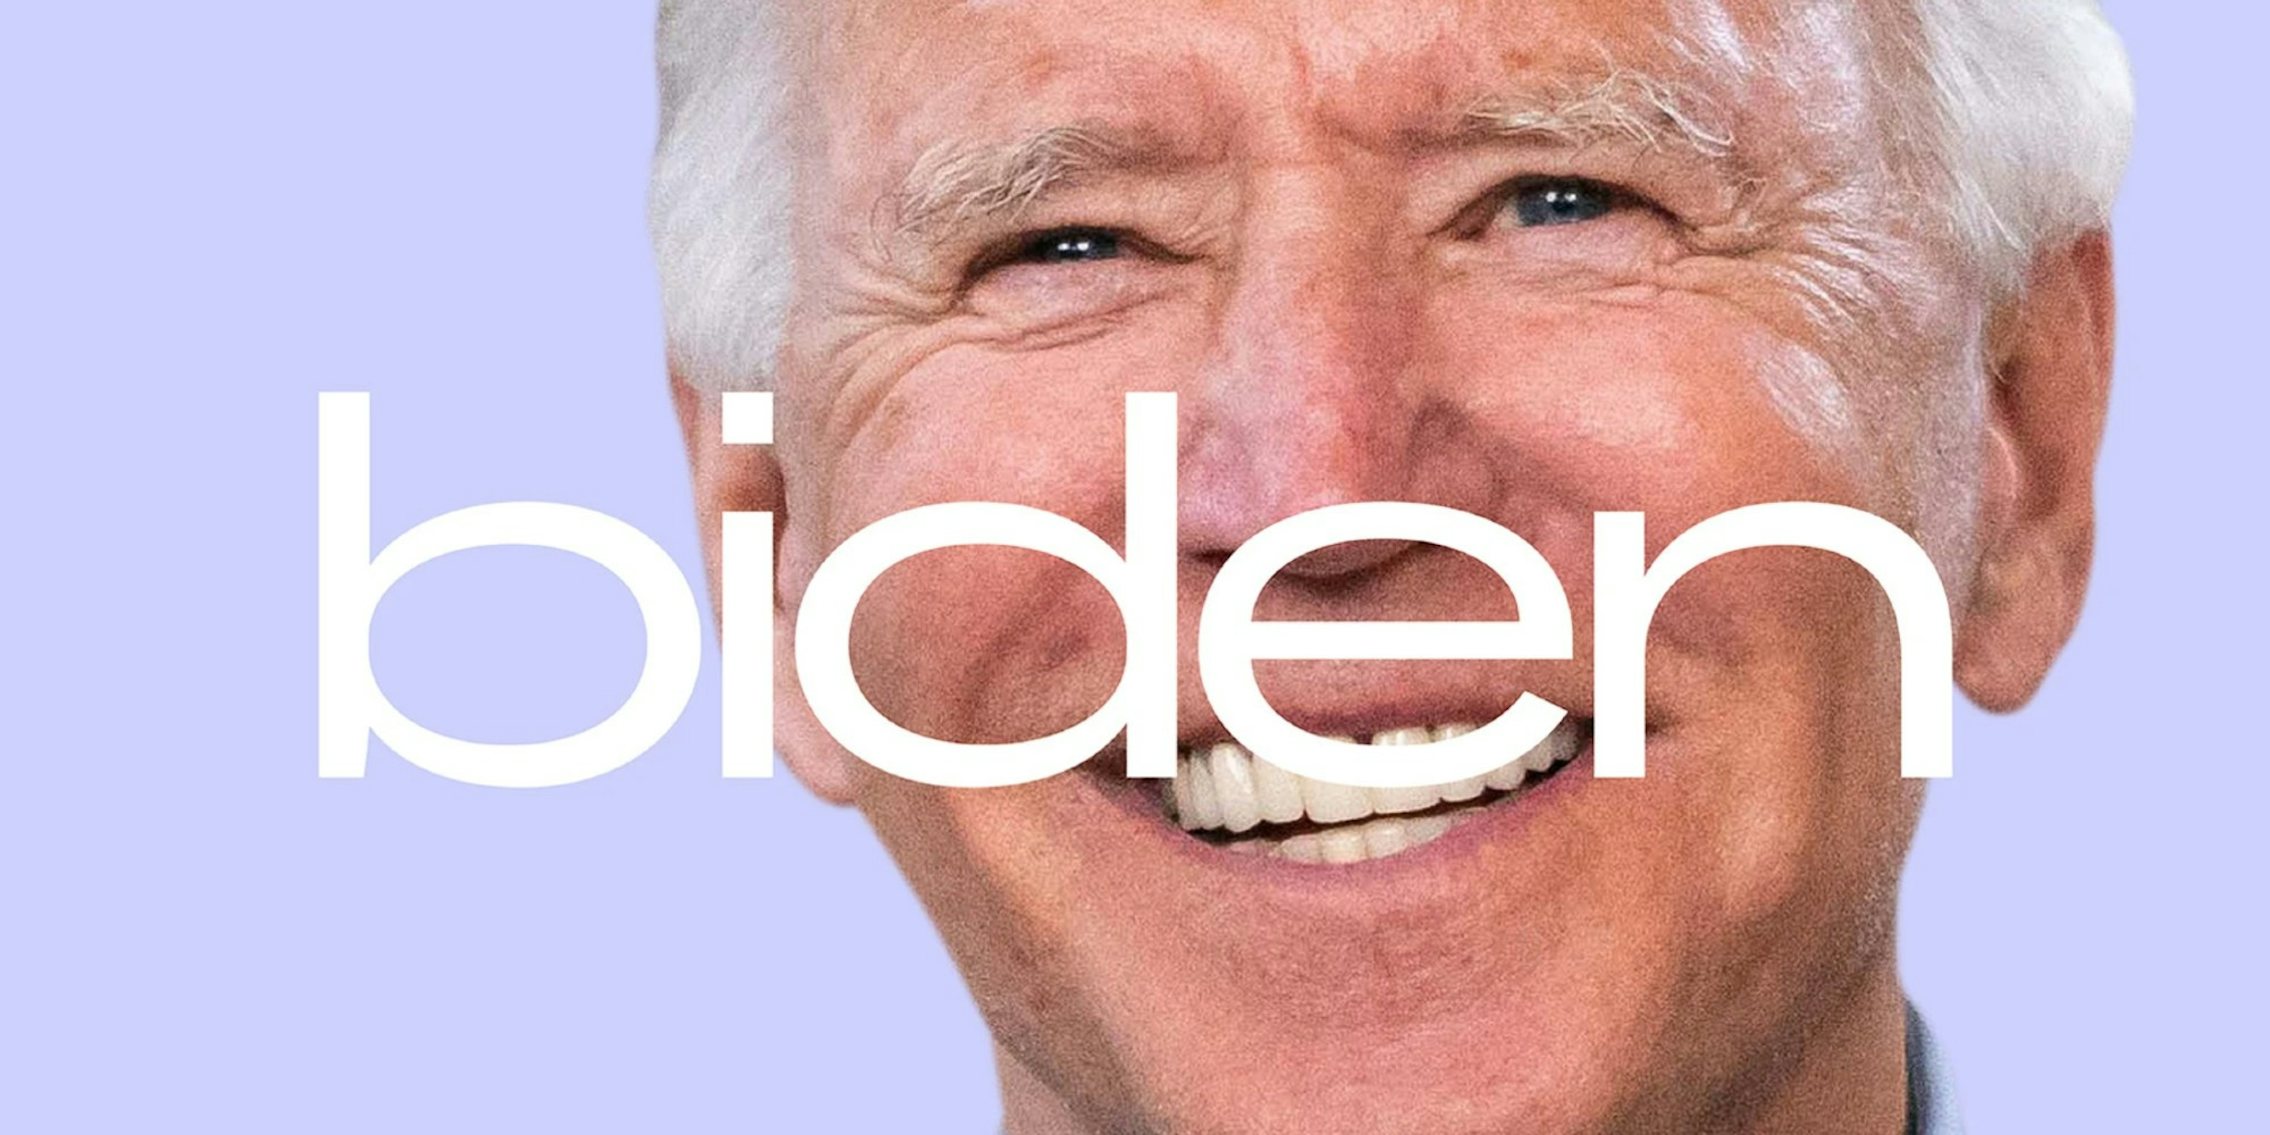 The word Biden over Joe Biden's face